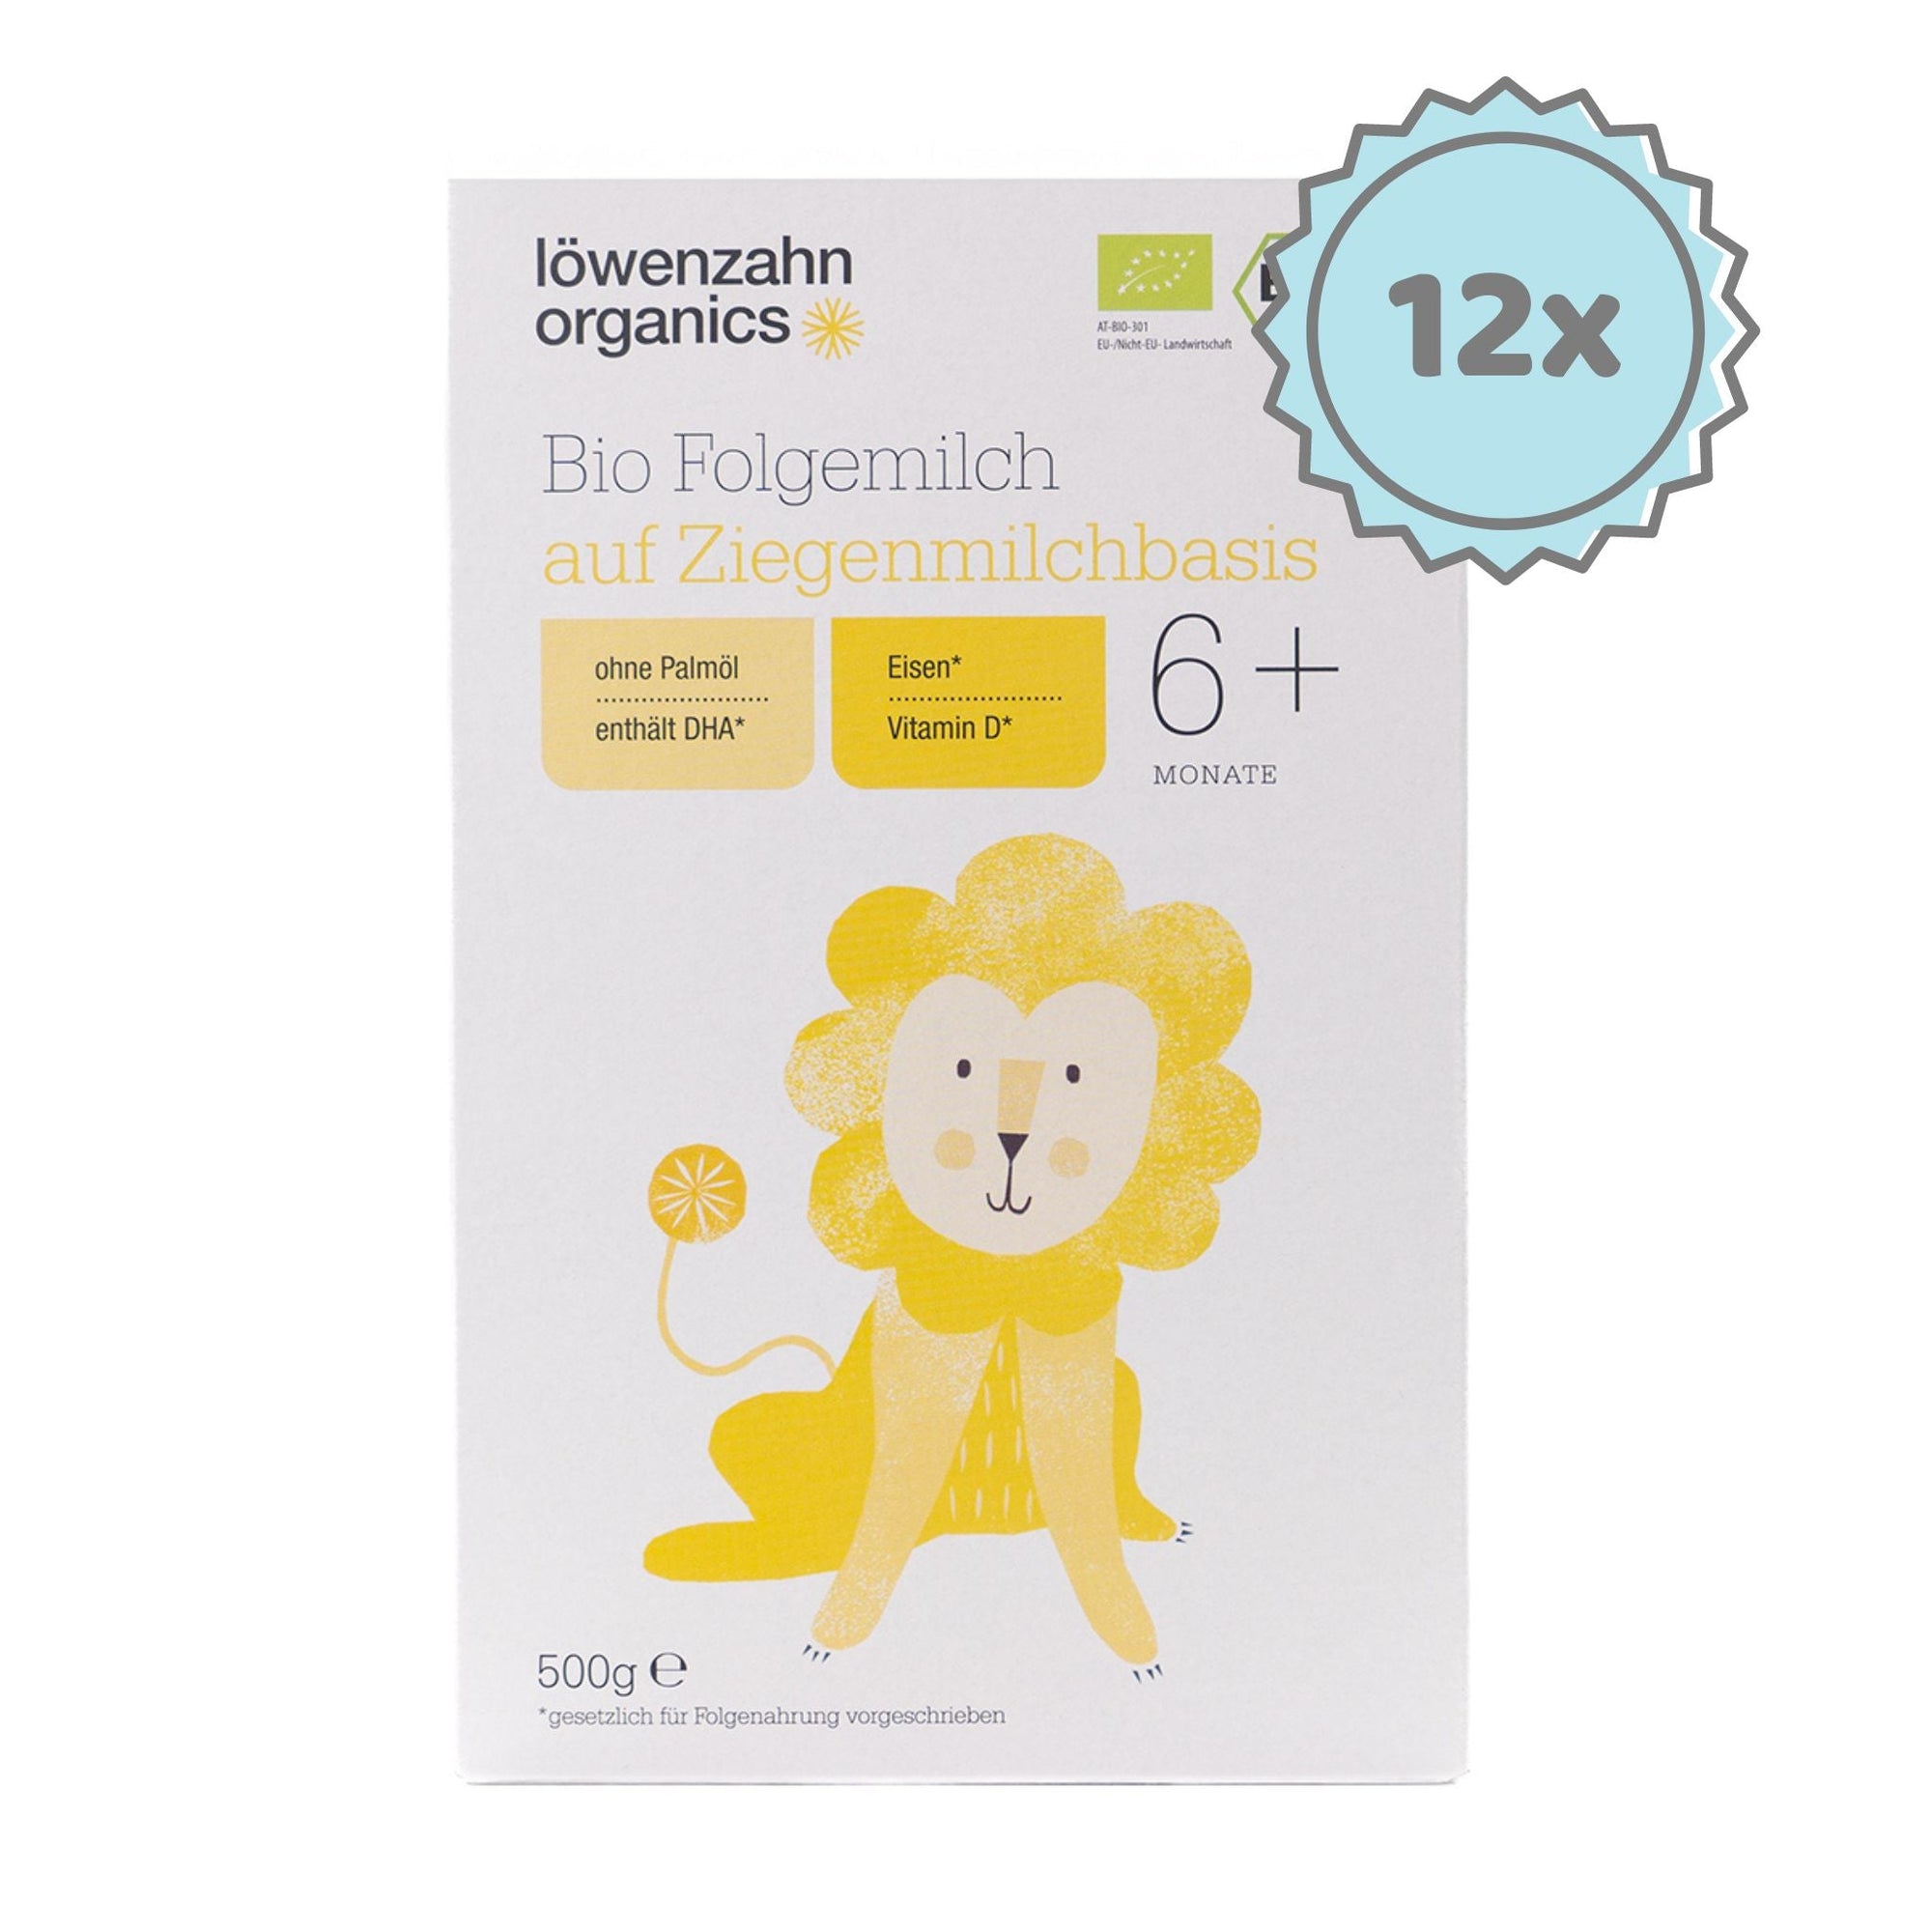 Löwenzahn Organics Goat Stage 2  | European Follow-On Baby Formula | 12 boxes